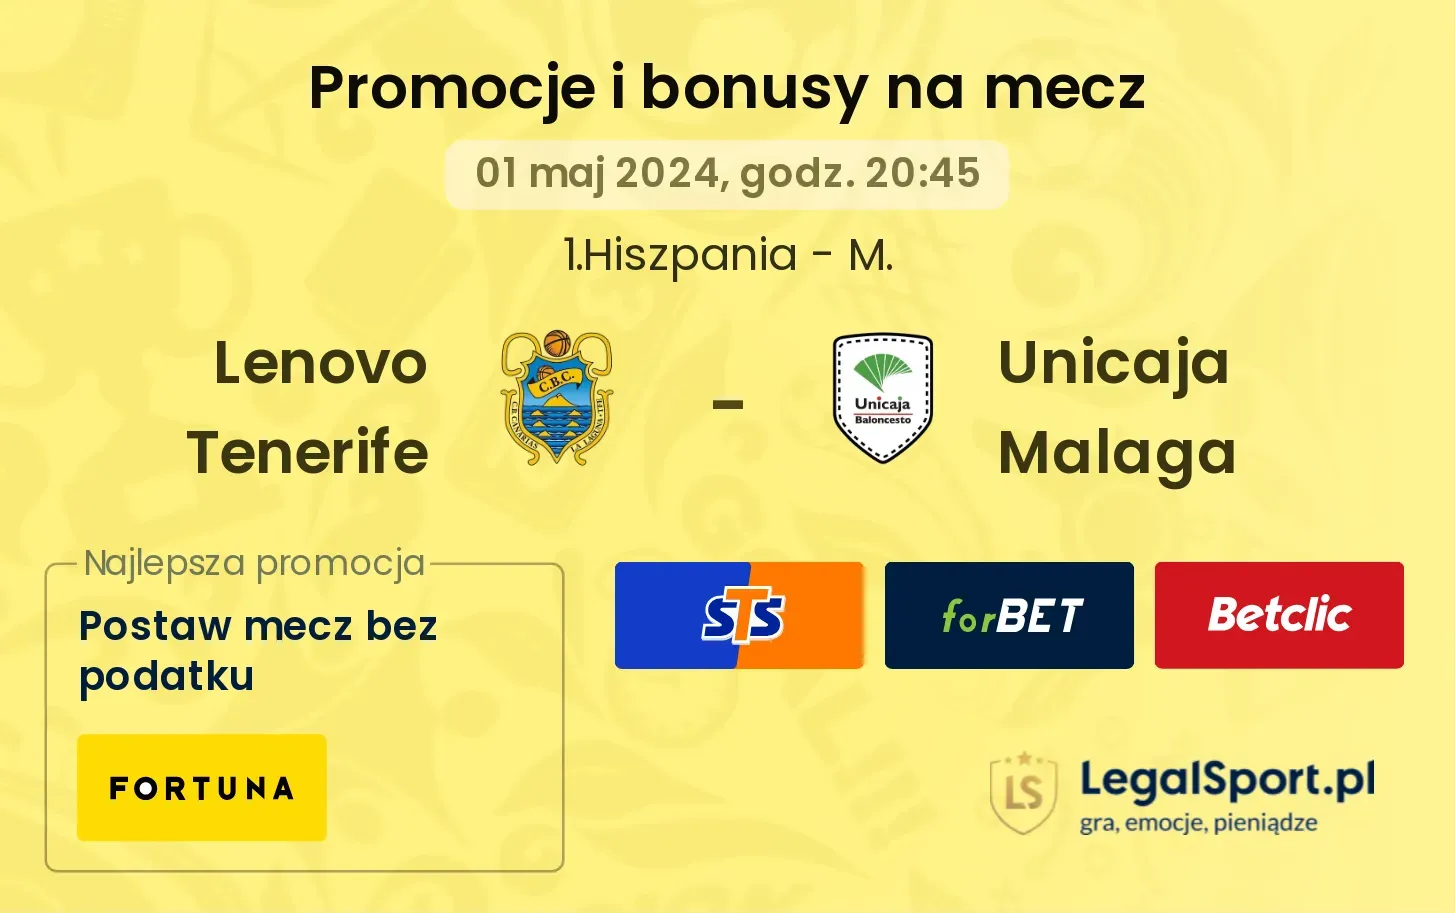 Lenovo Tenerife - Unicaja Malaga promocje bonusy na mecz